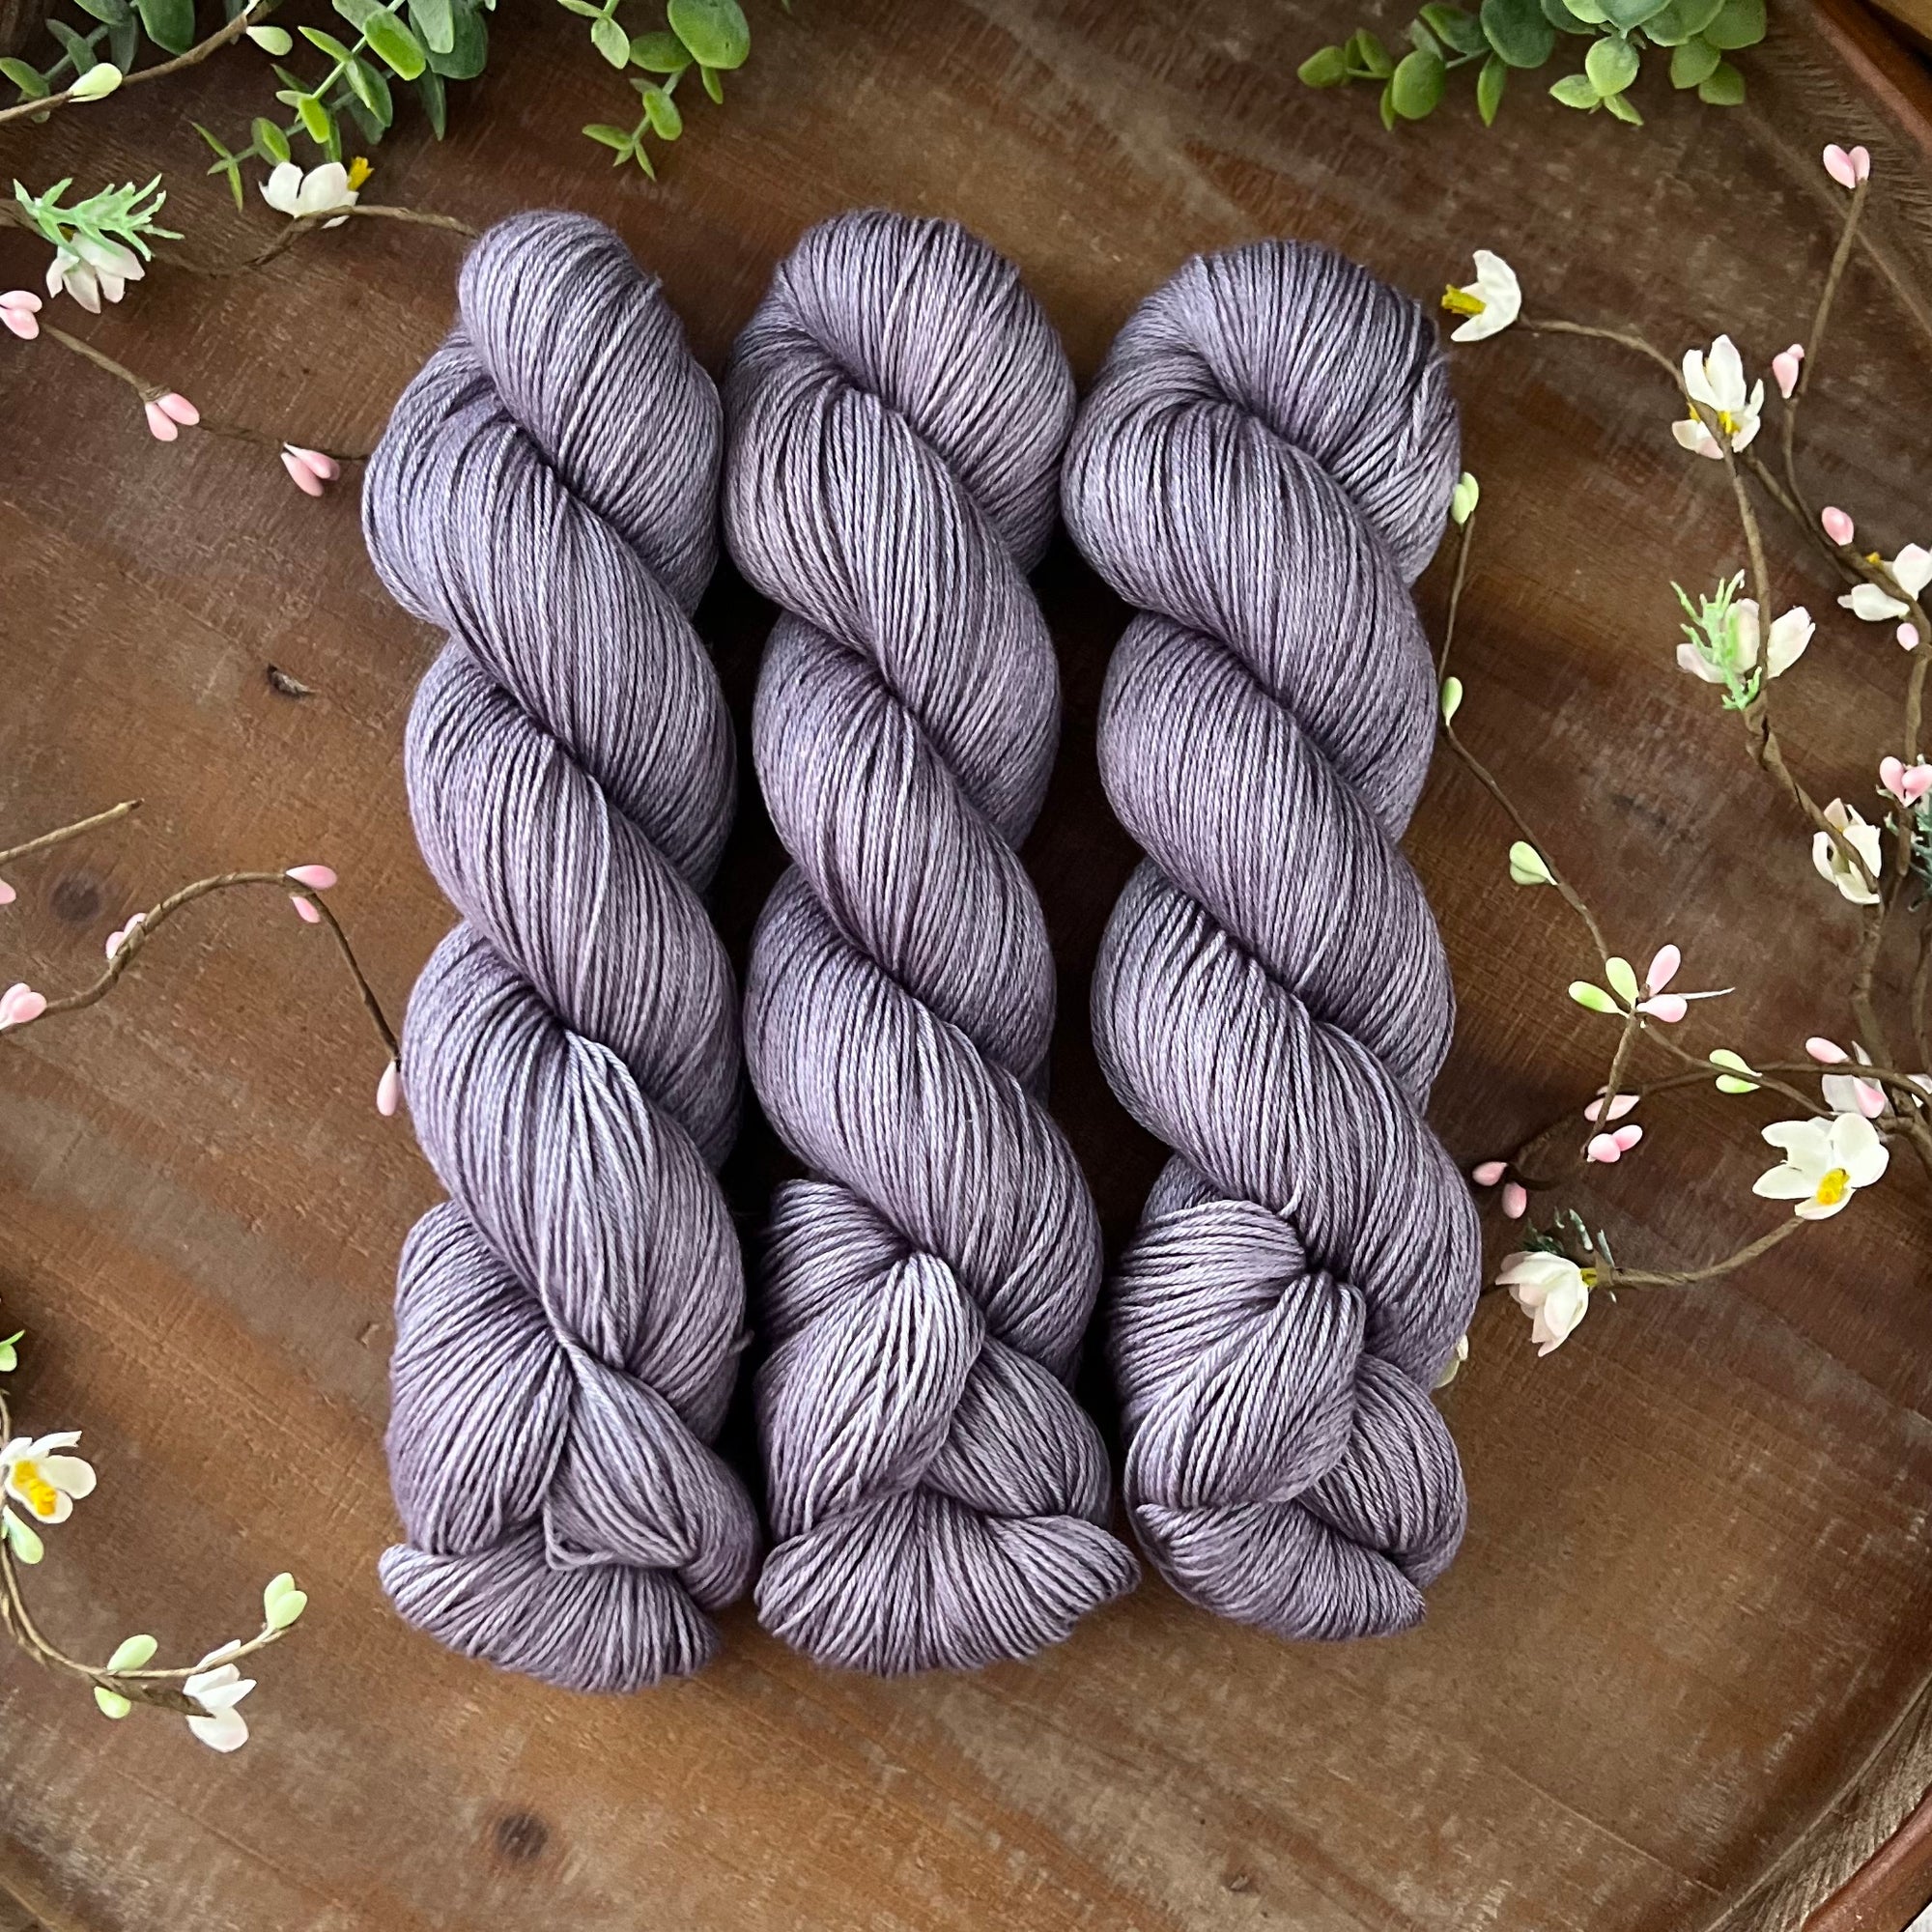 "Mist" Merino Cotton 50/50 Hand-dyed Yarn